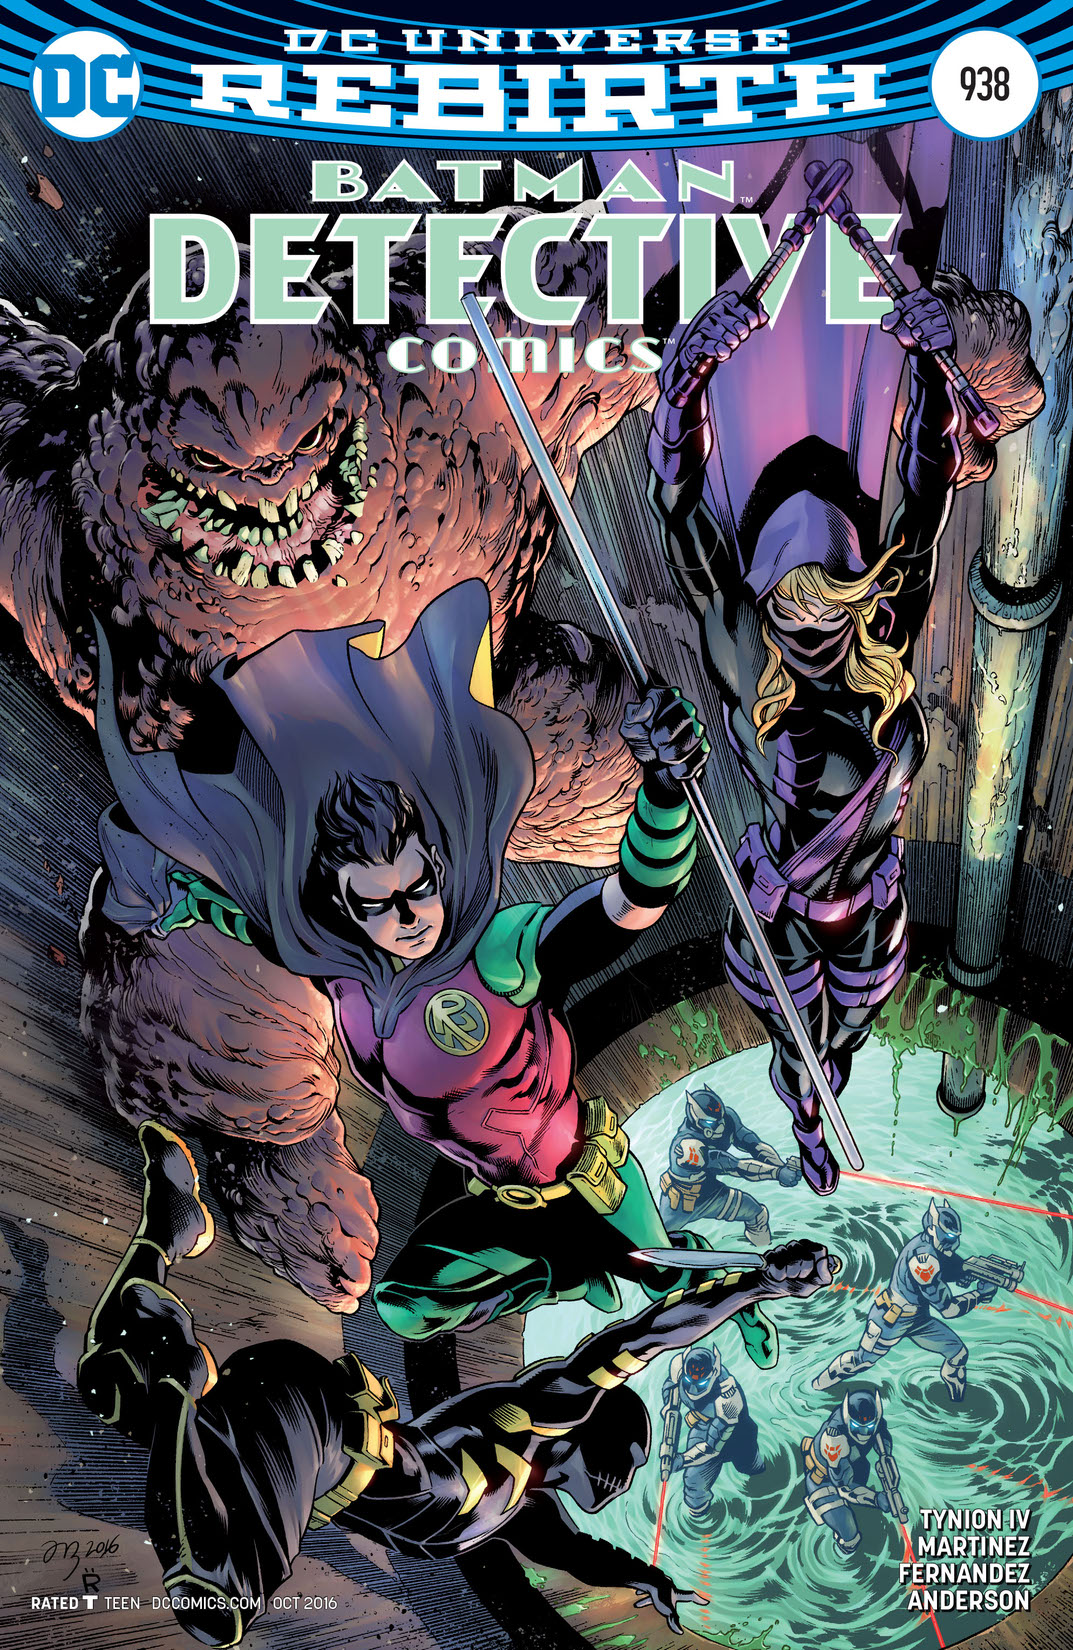 Detective Comics (2016-) #938 preview images